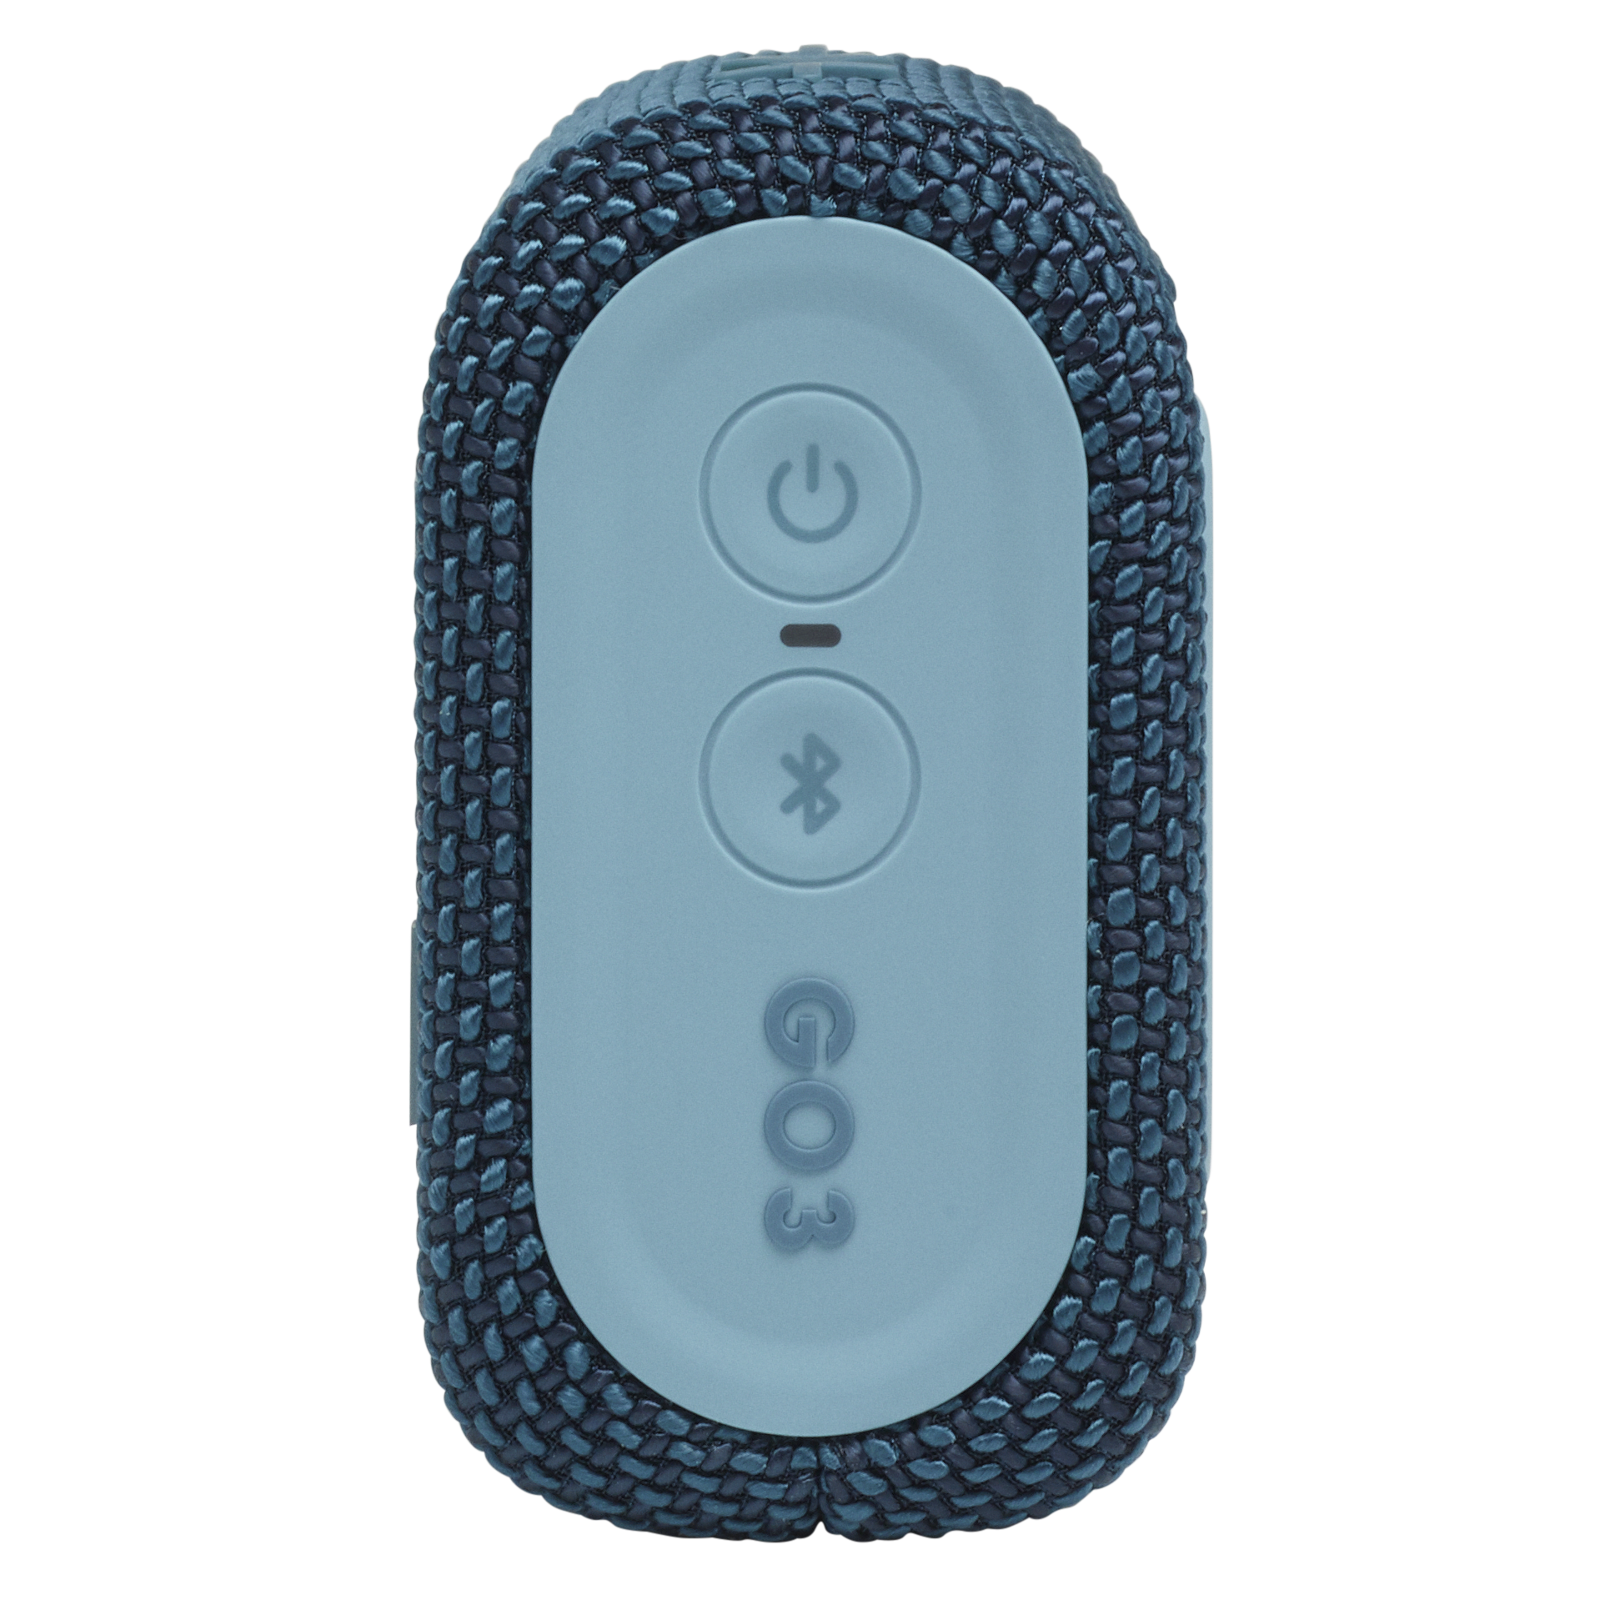 JBL Go 3 Portable Waterproof Wireless IP67 Dustproof Outdoor Bluetooth  Speaker (Green) 